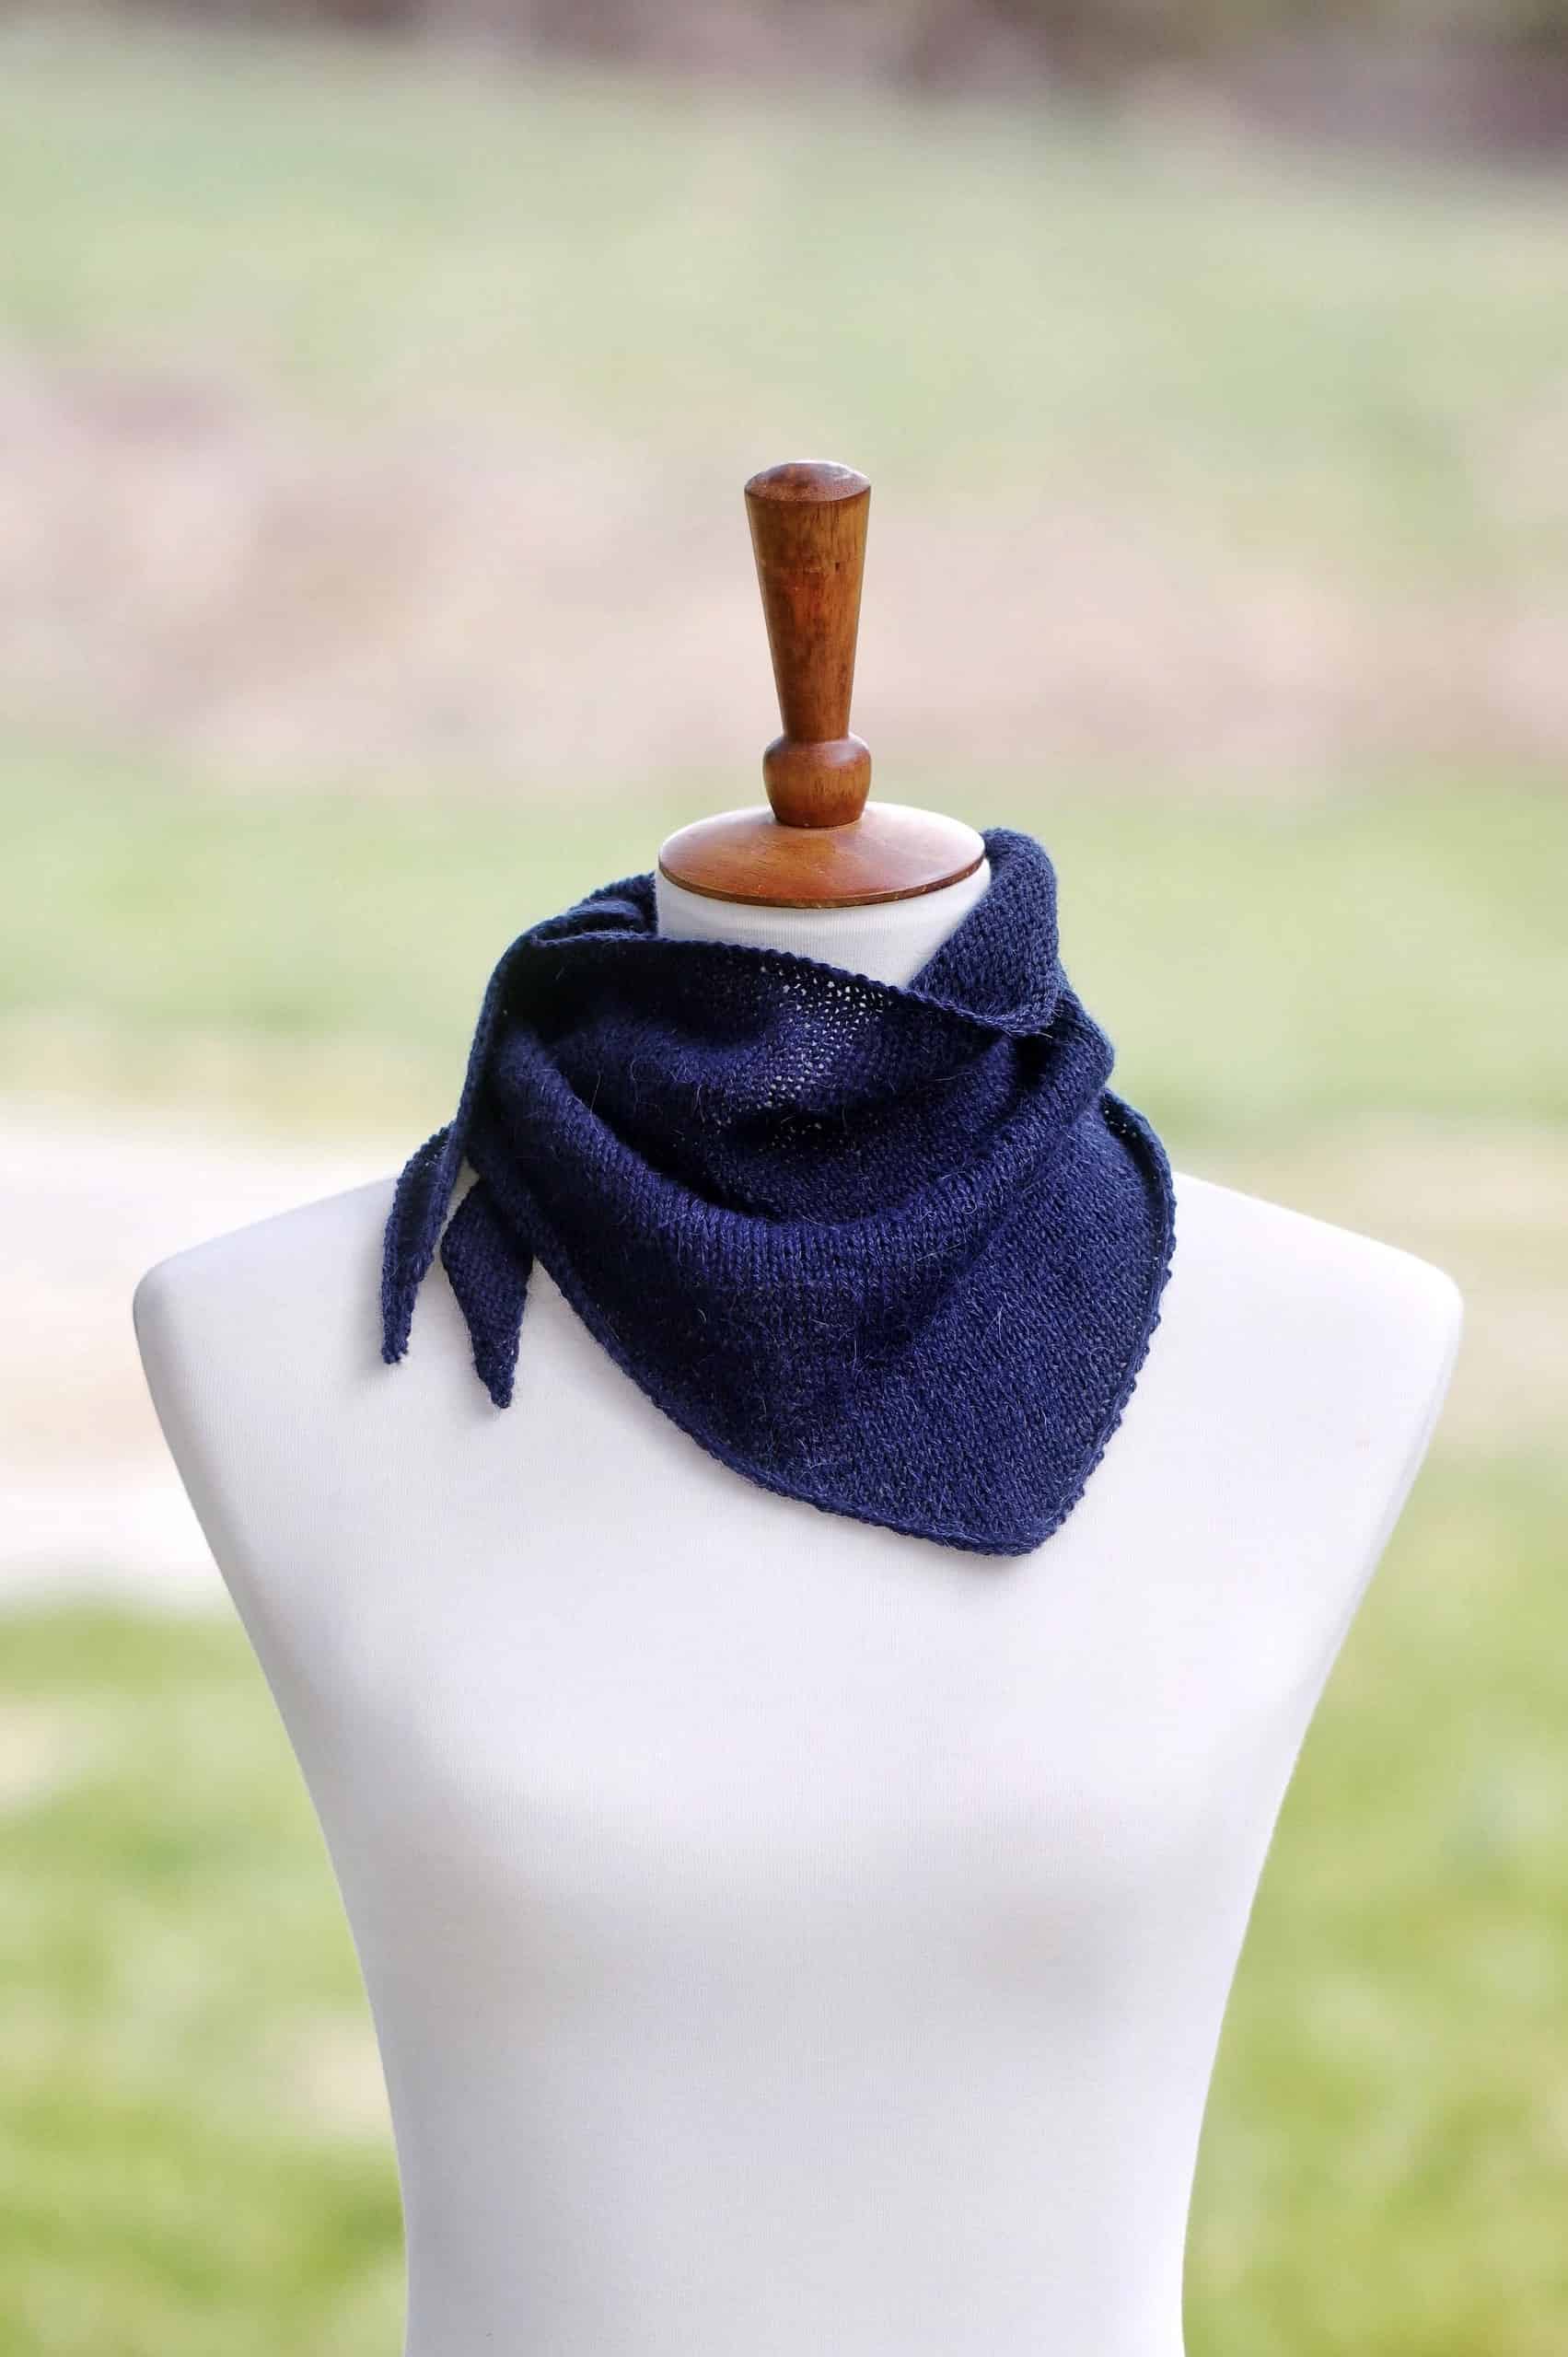 https://darlingjadore.com/wp-content/uploads/2023/03/small-neck-scarf-shawl-knitting-pattern-knit-kerchief-scaled.jpg